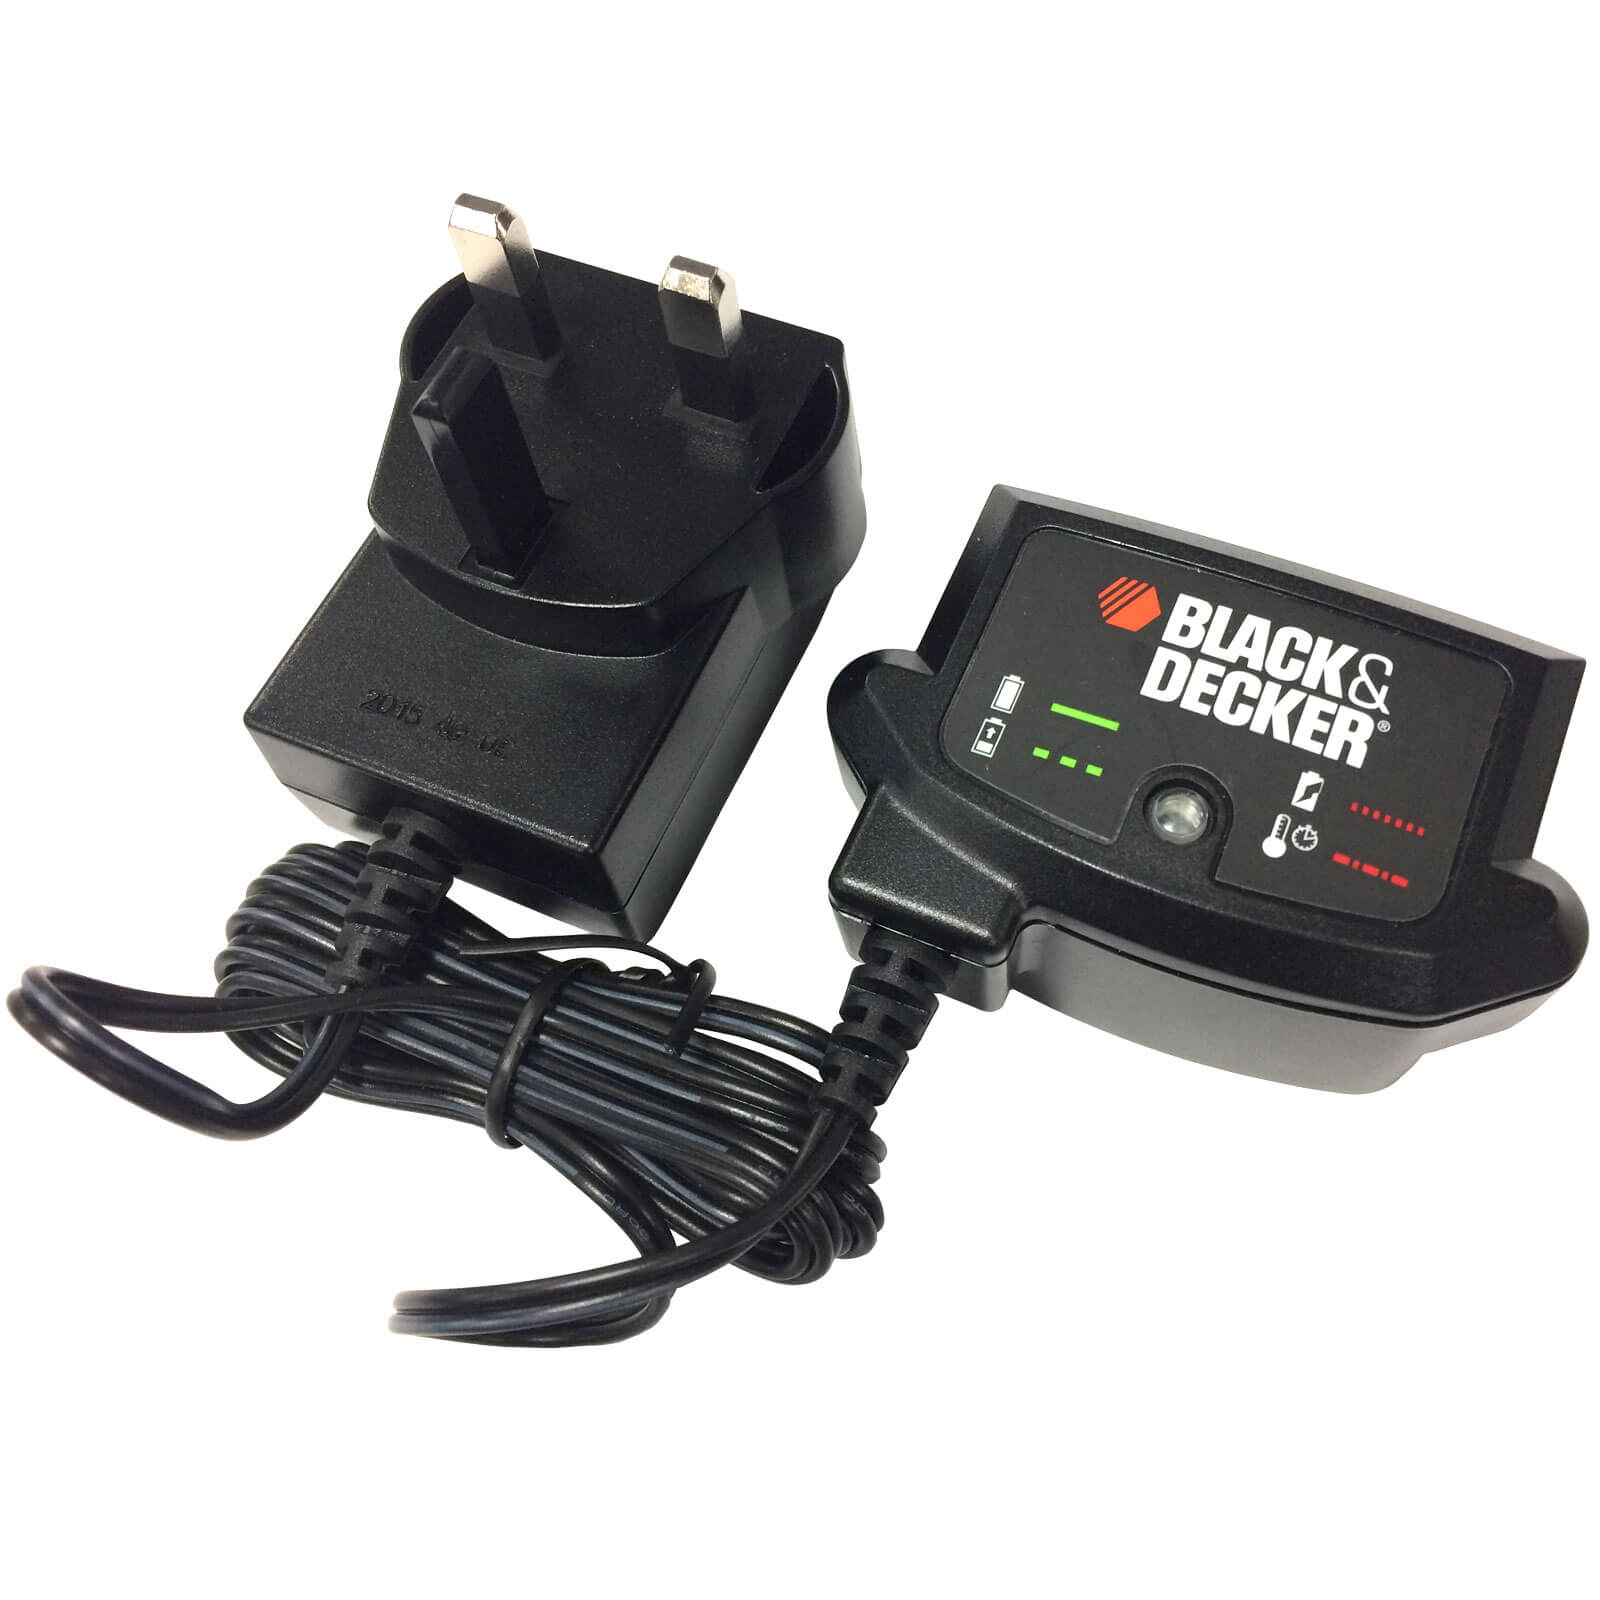 Black & Decker 18v battery charger PARTIAL tear down 